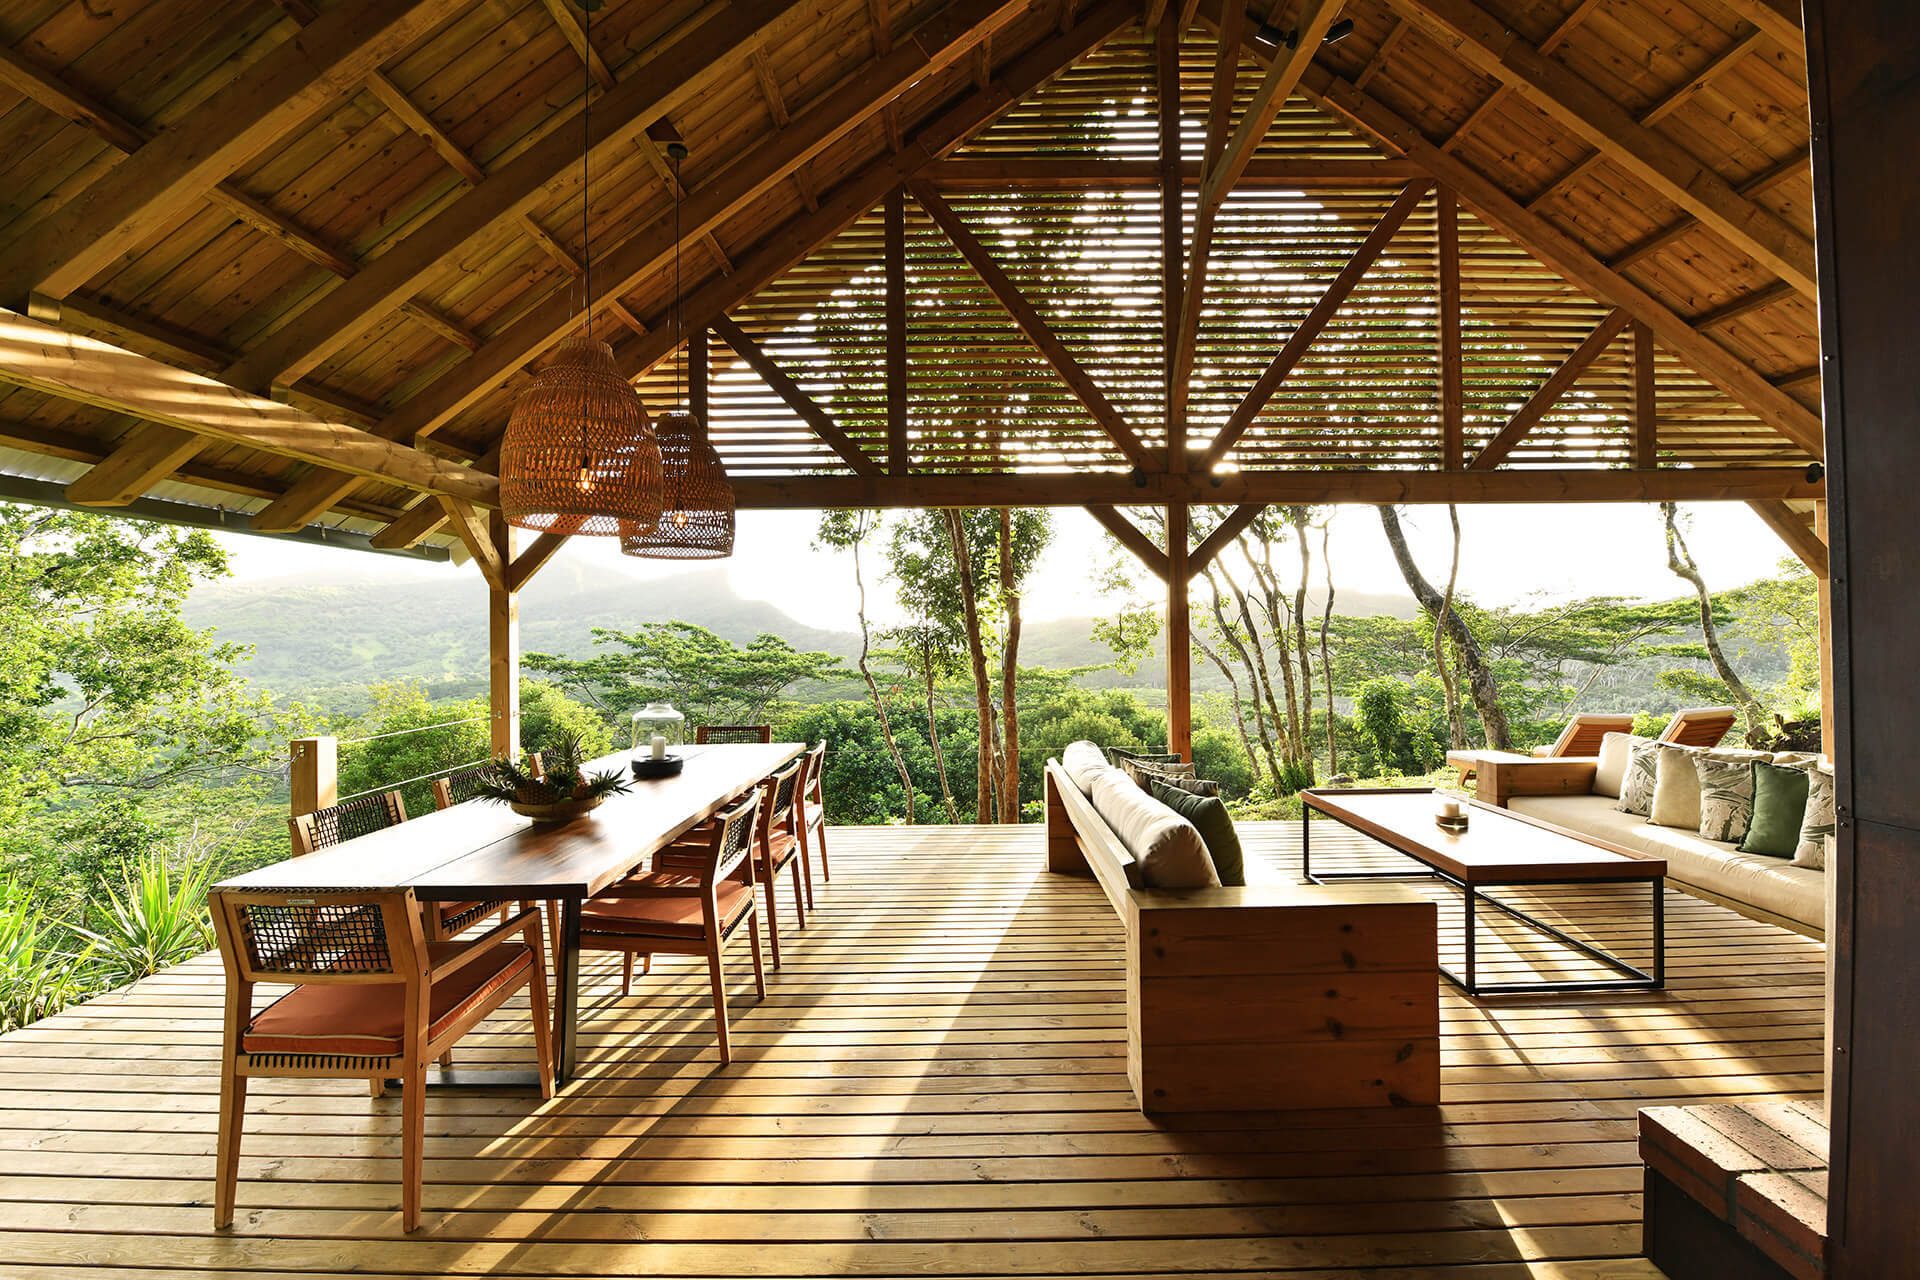 Interior design, Eco hotel, Plant, Shade, Wood, Table, Tree, Cottage, Leisure